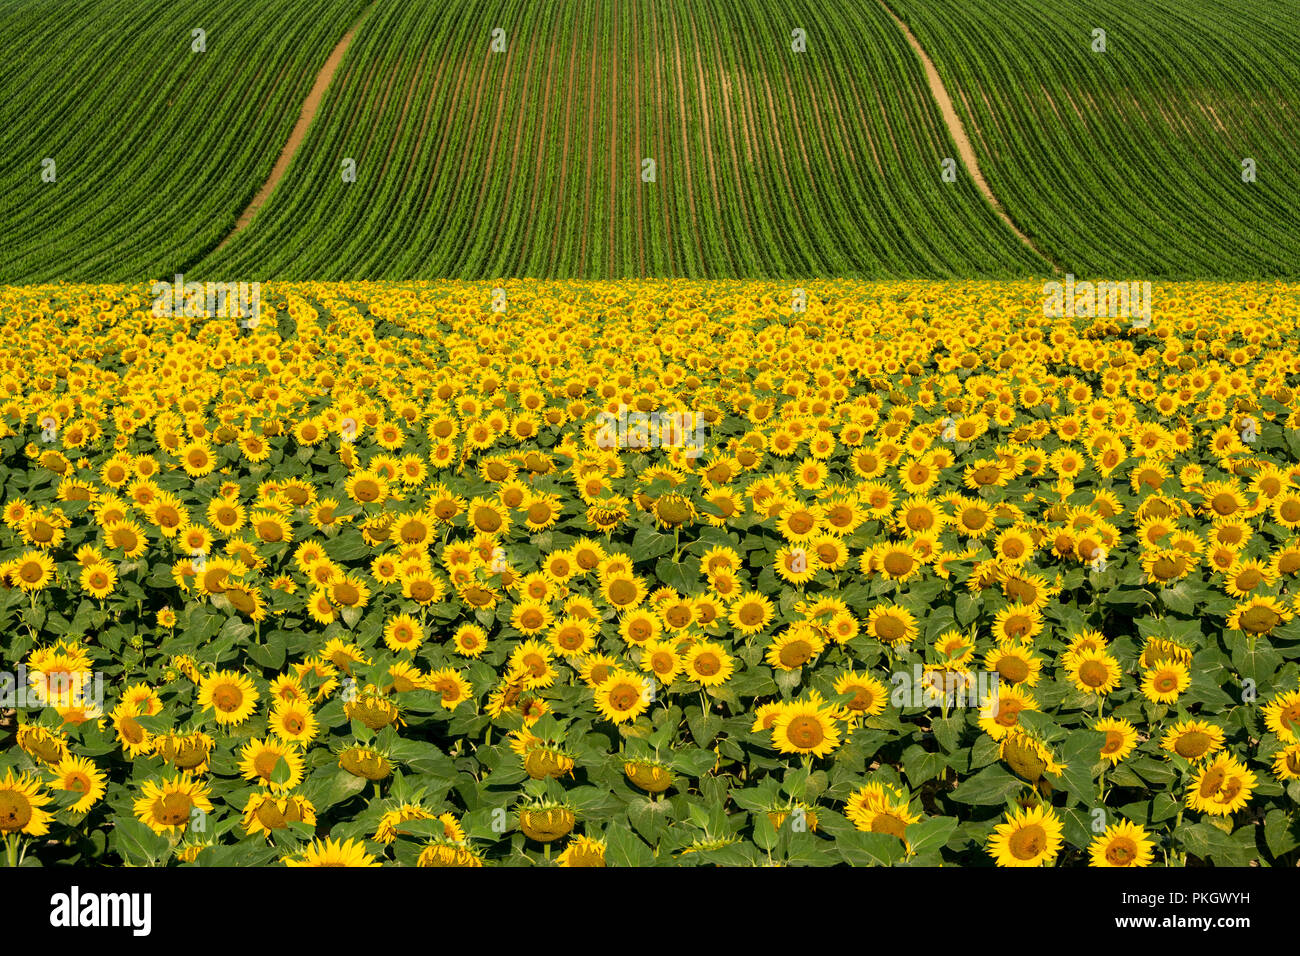 Feld mit Sonnenblumen und Mais, Limagne Plain, Puy de Dome Abteilung, Auvergne Rhône-Alpes, Frankreich, Europa Stockfoto